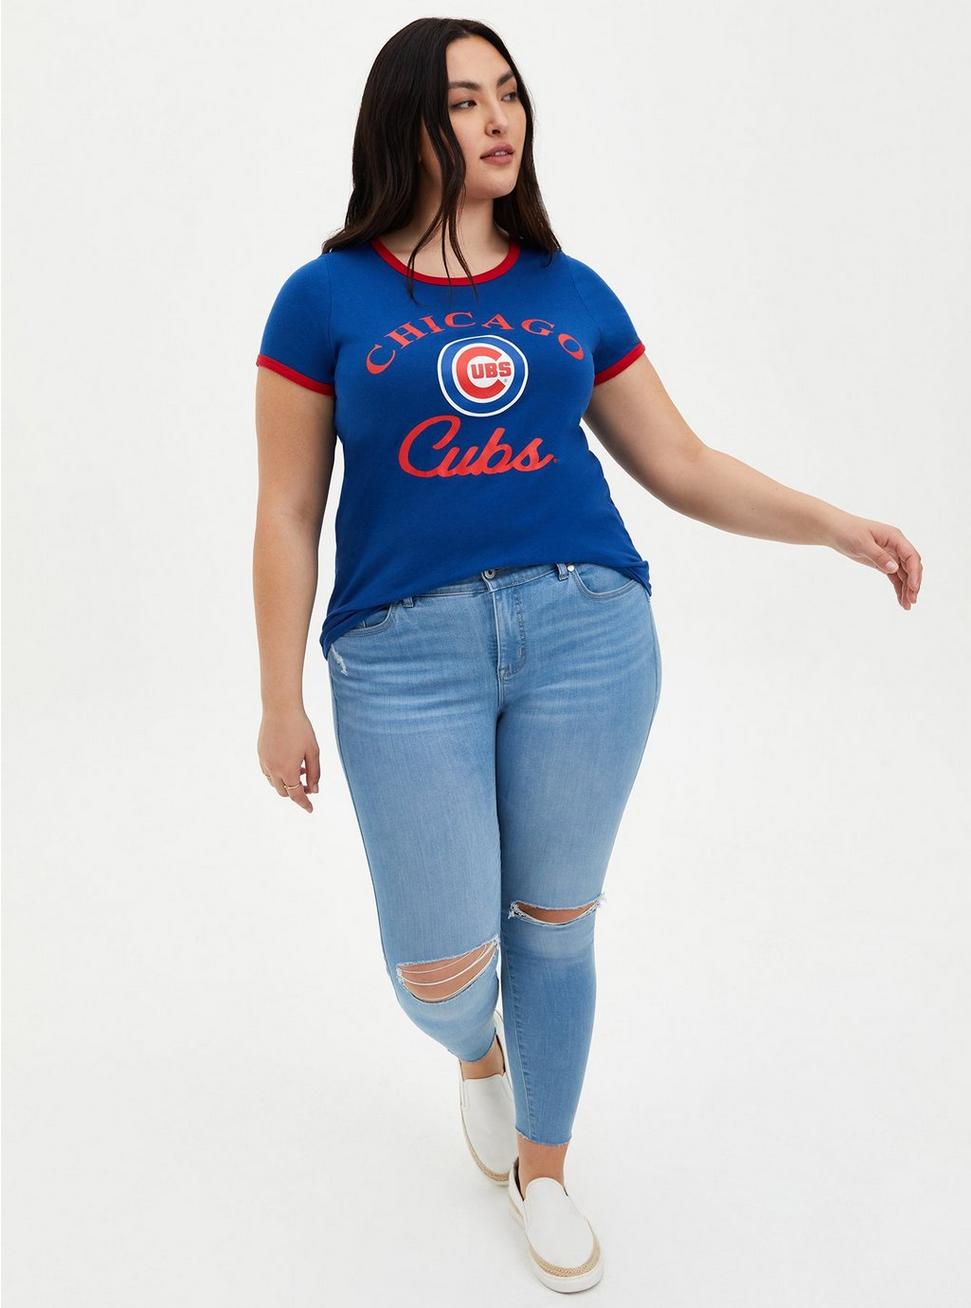 chicago cubs women's plus size shirts